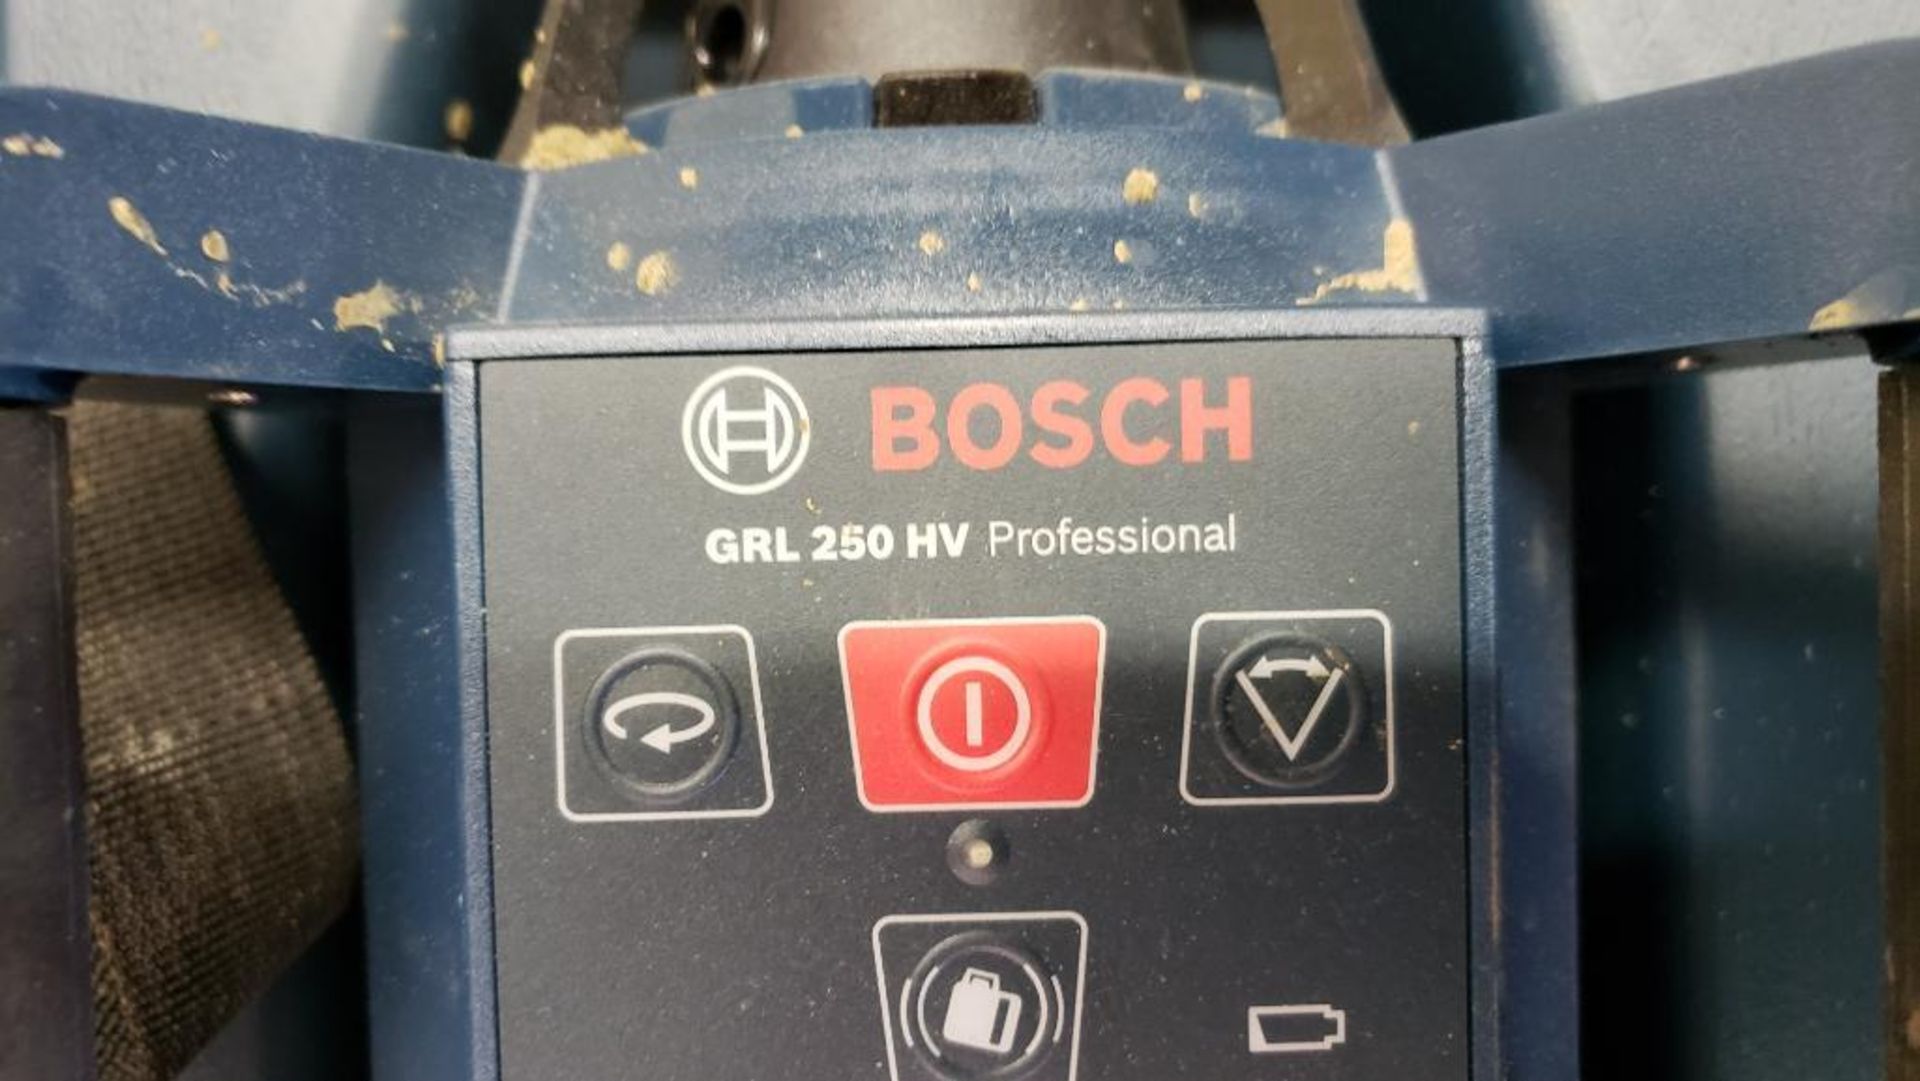 Bosch GRL 250 HV Professional rotarty laser kit. - Image 5 of 9